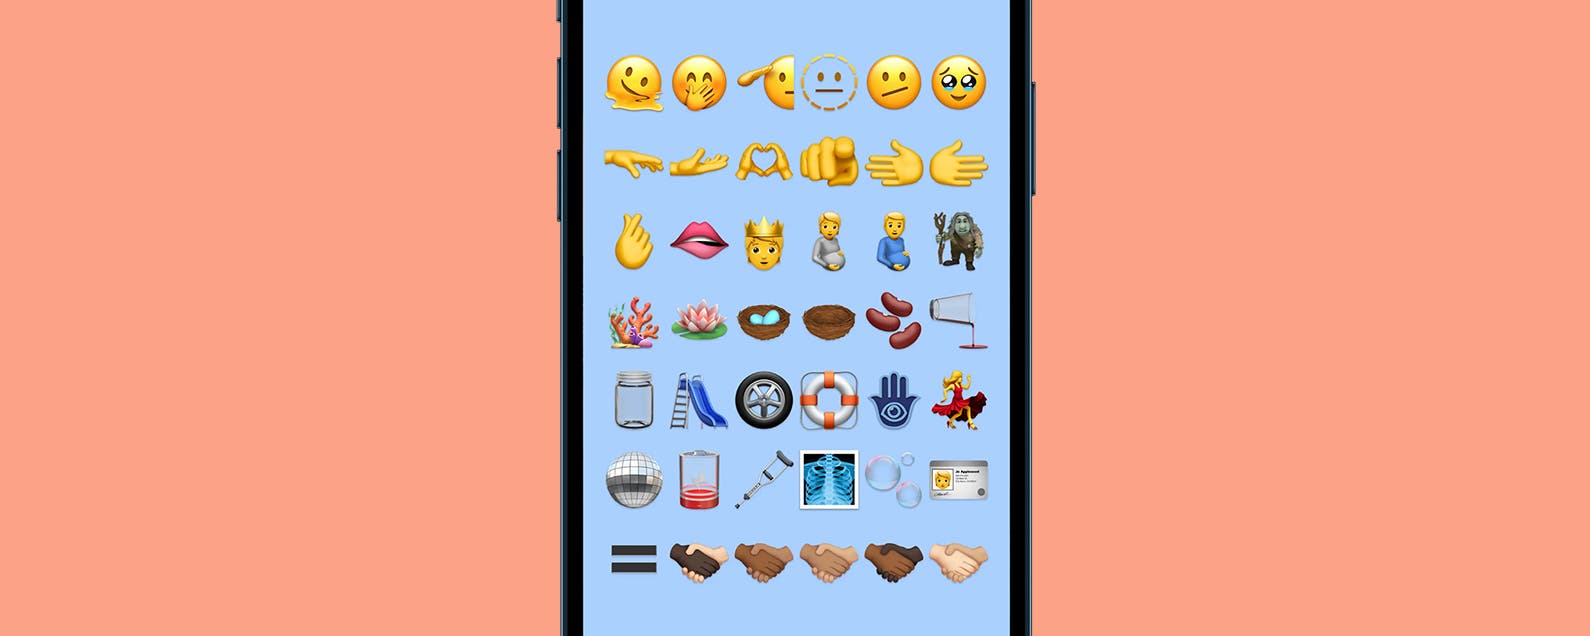 iOS 15.4 Adds New Emoji Like Melting Face, Biting Lip, Heart Hands